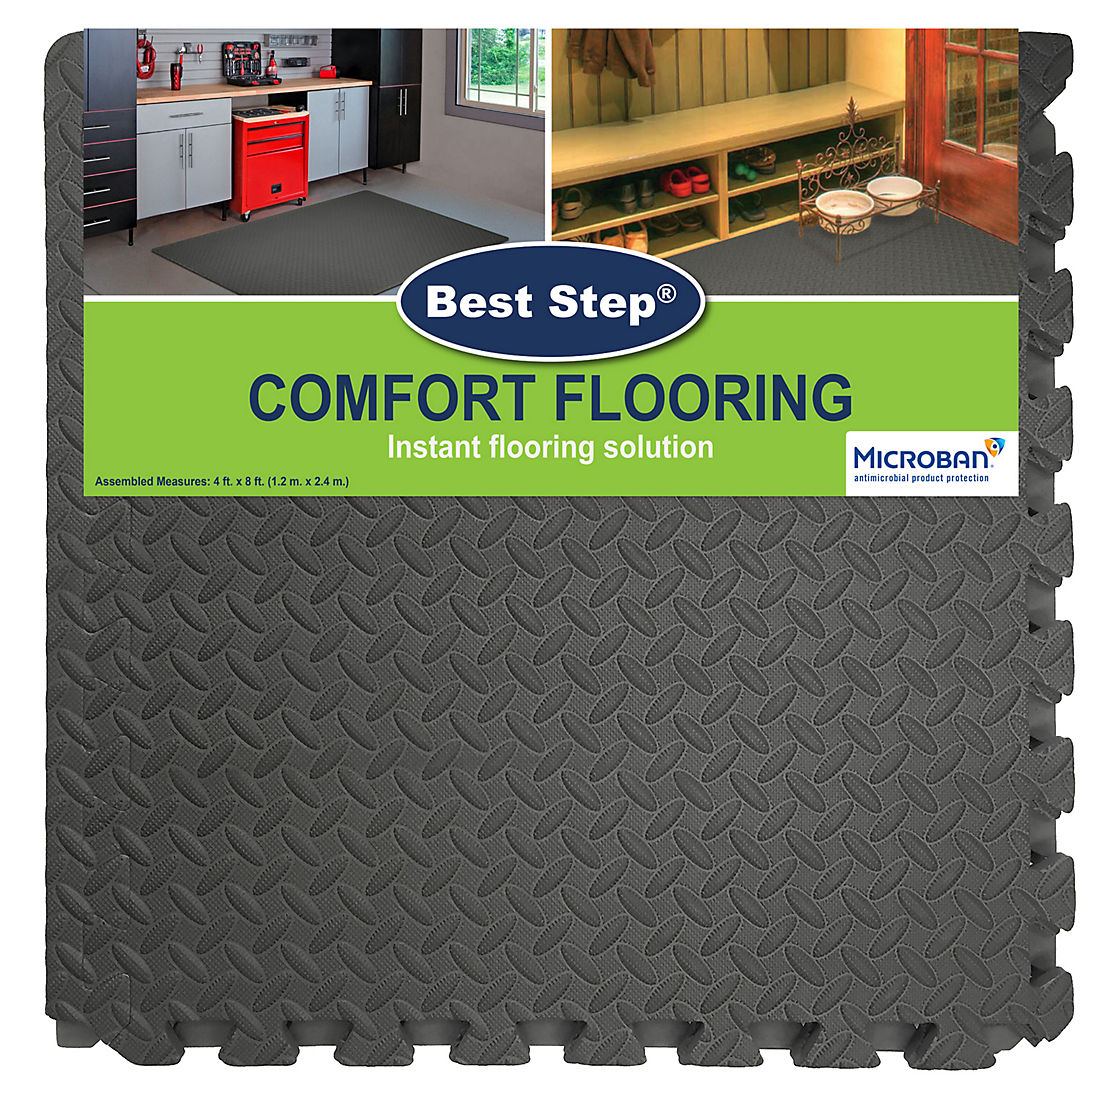 Best Step Comfort Flooring 8 Pk Bjs Wholesale Club